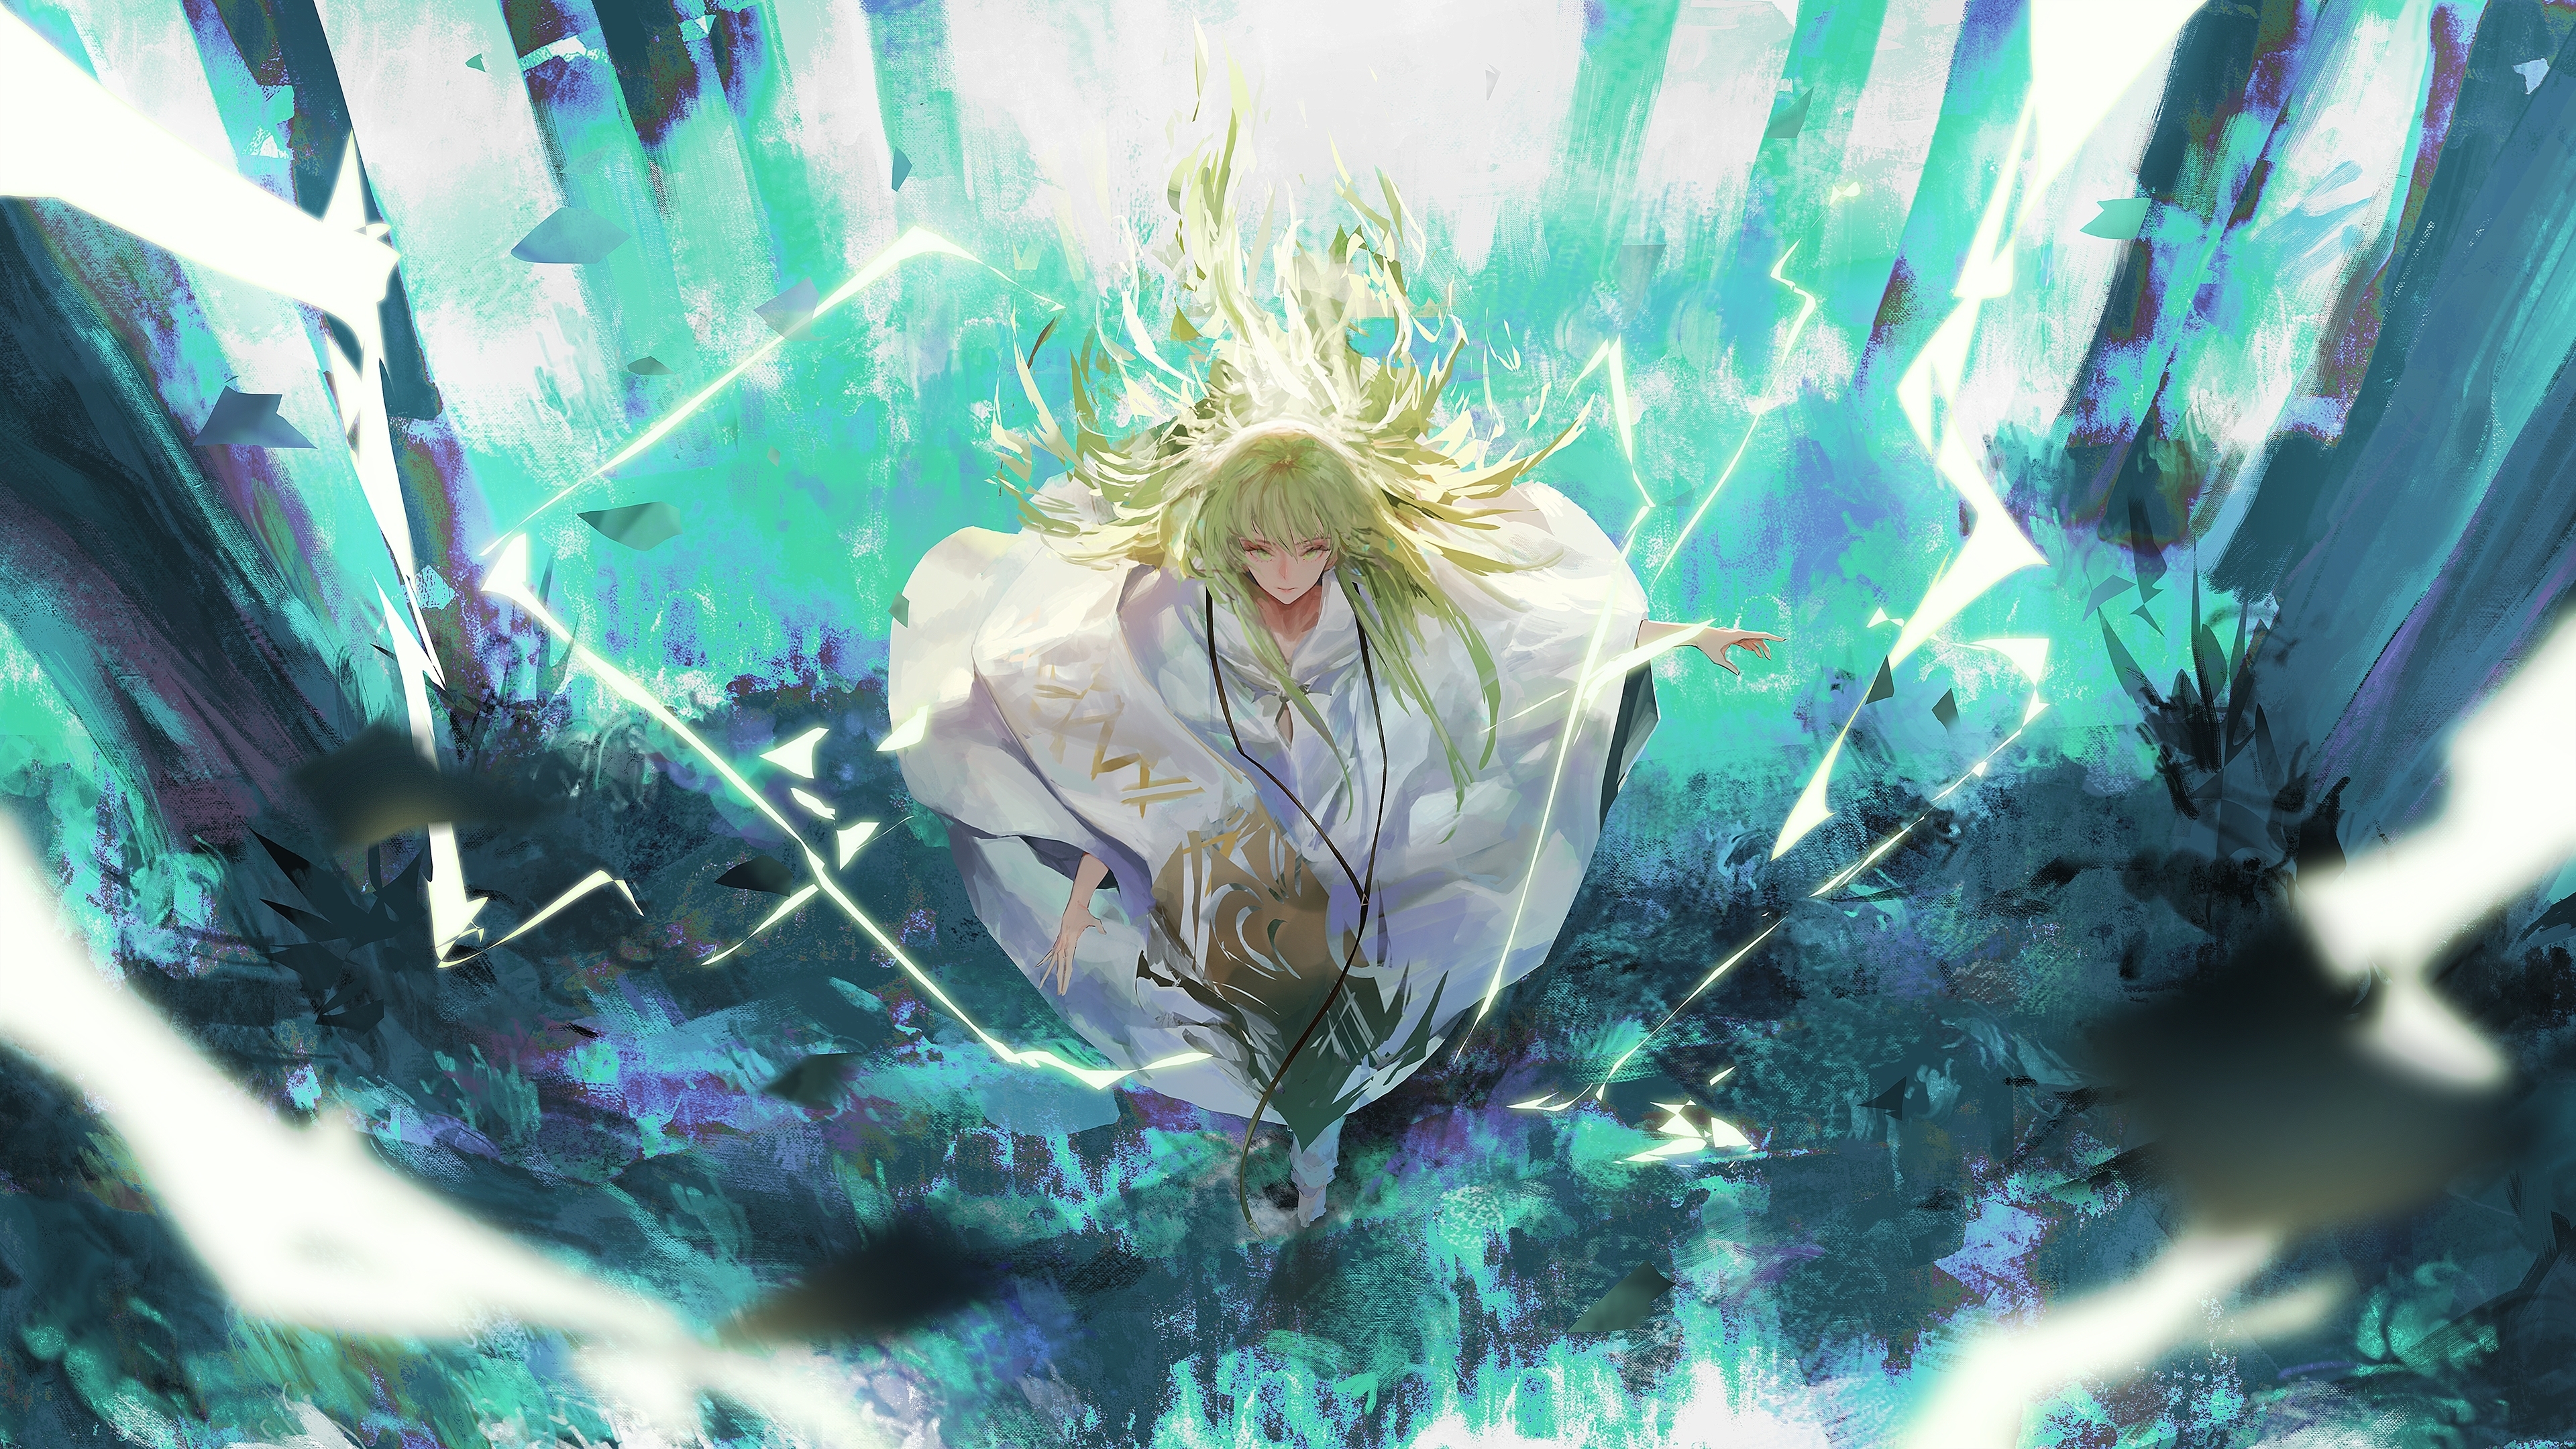 Download 3840x2160 Wallpaper Art Enkidu Fate Grand Order Anime 4k Uhd 16 9 Widescreen 3840x2160 Hd Image Background